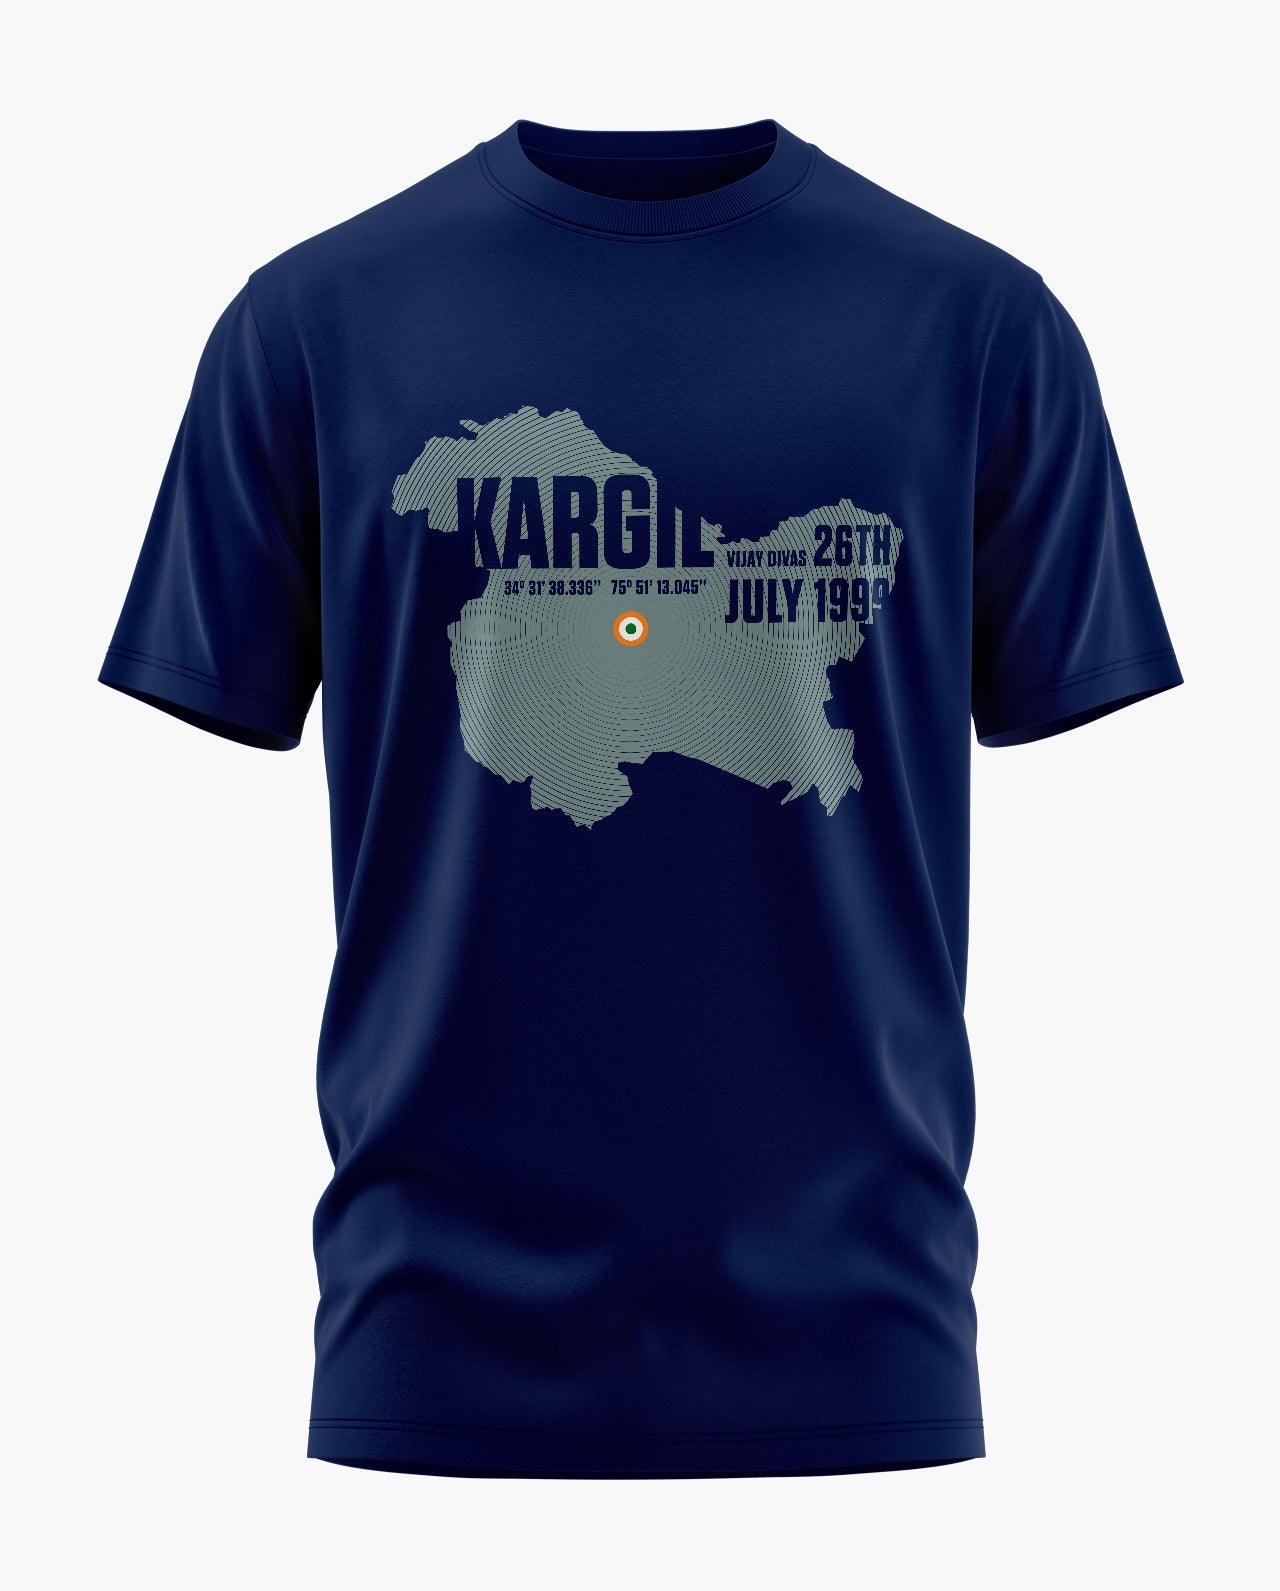 Kargil Map T-Shirt - Aero Armour